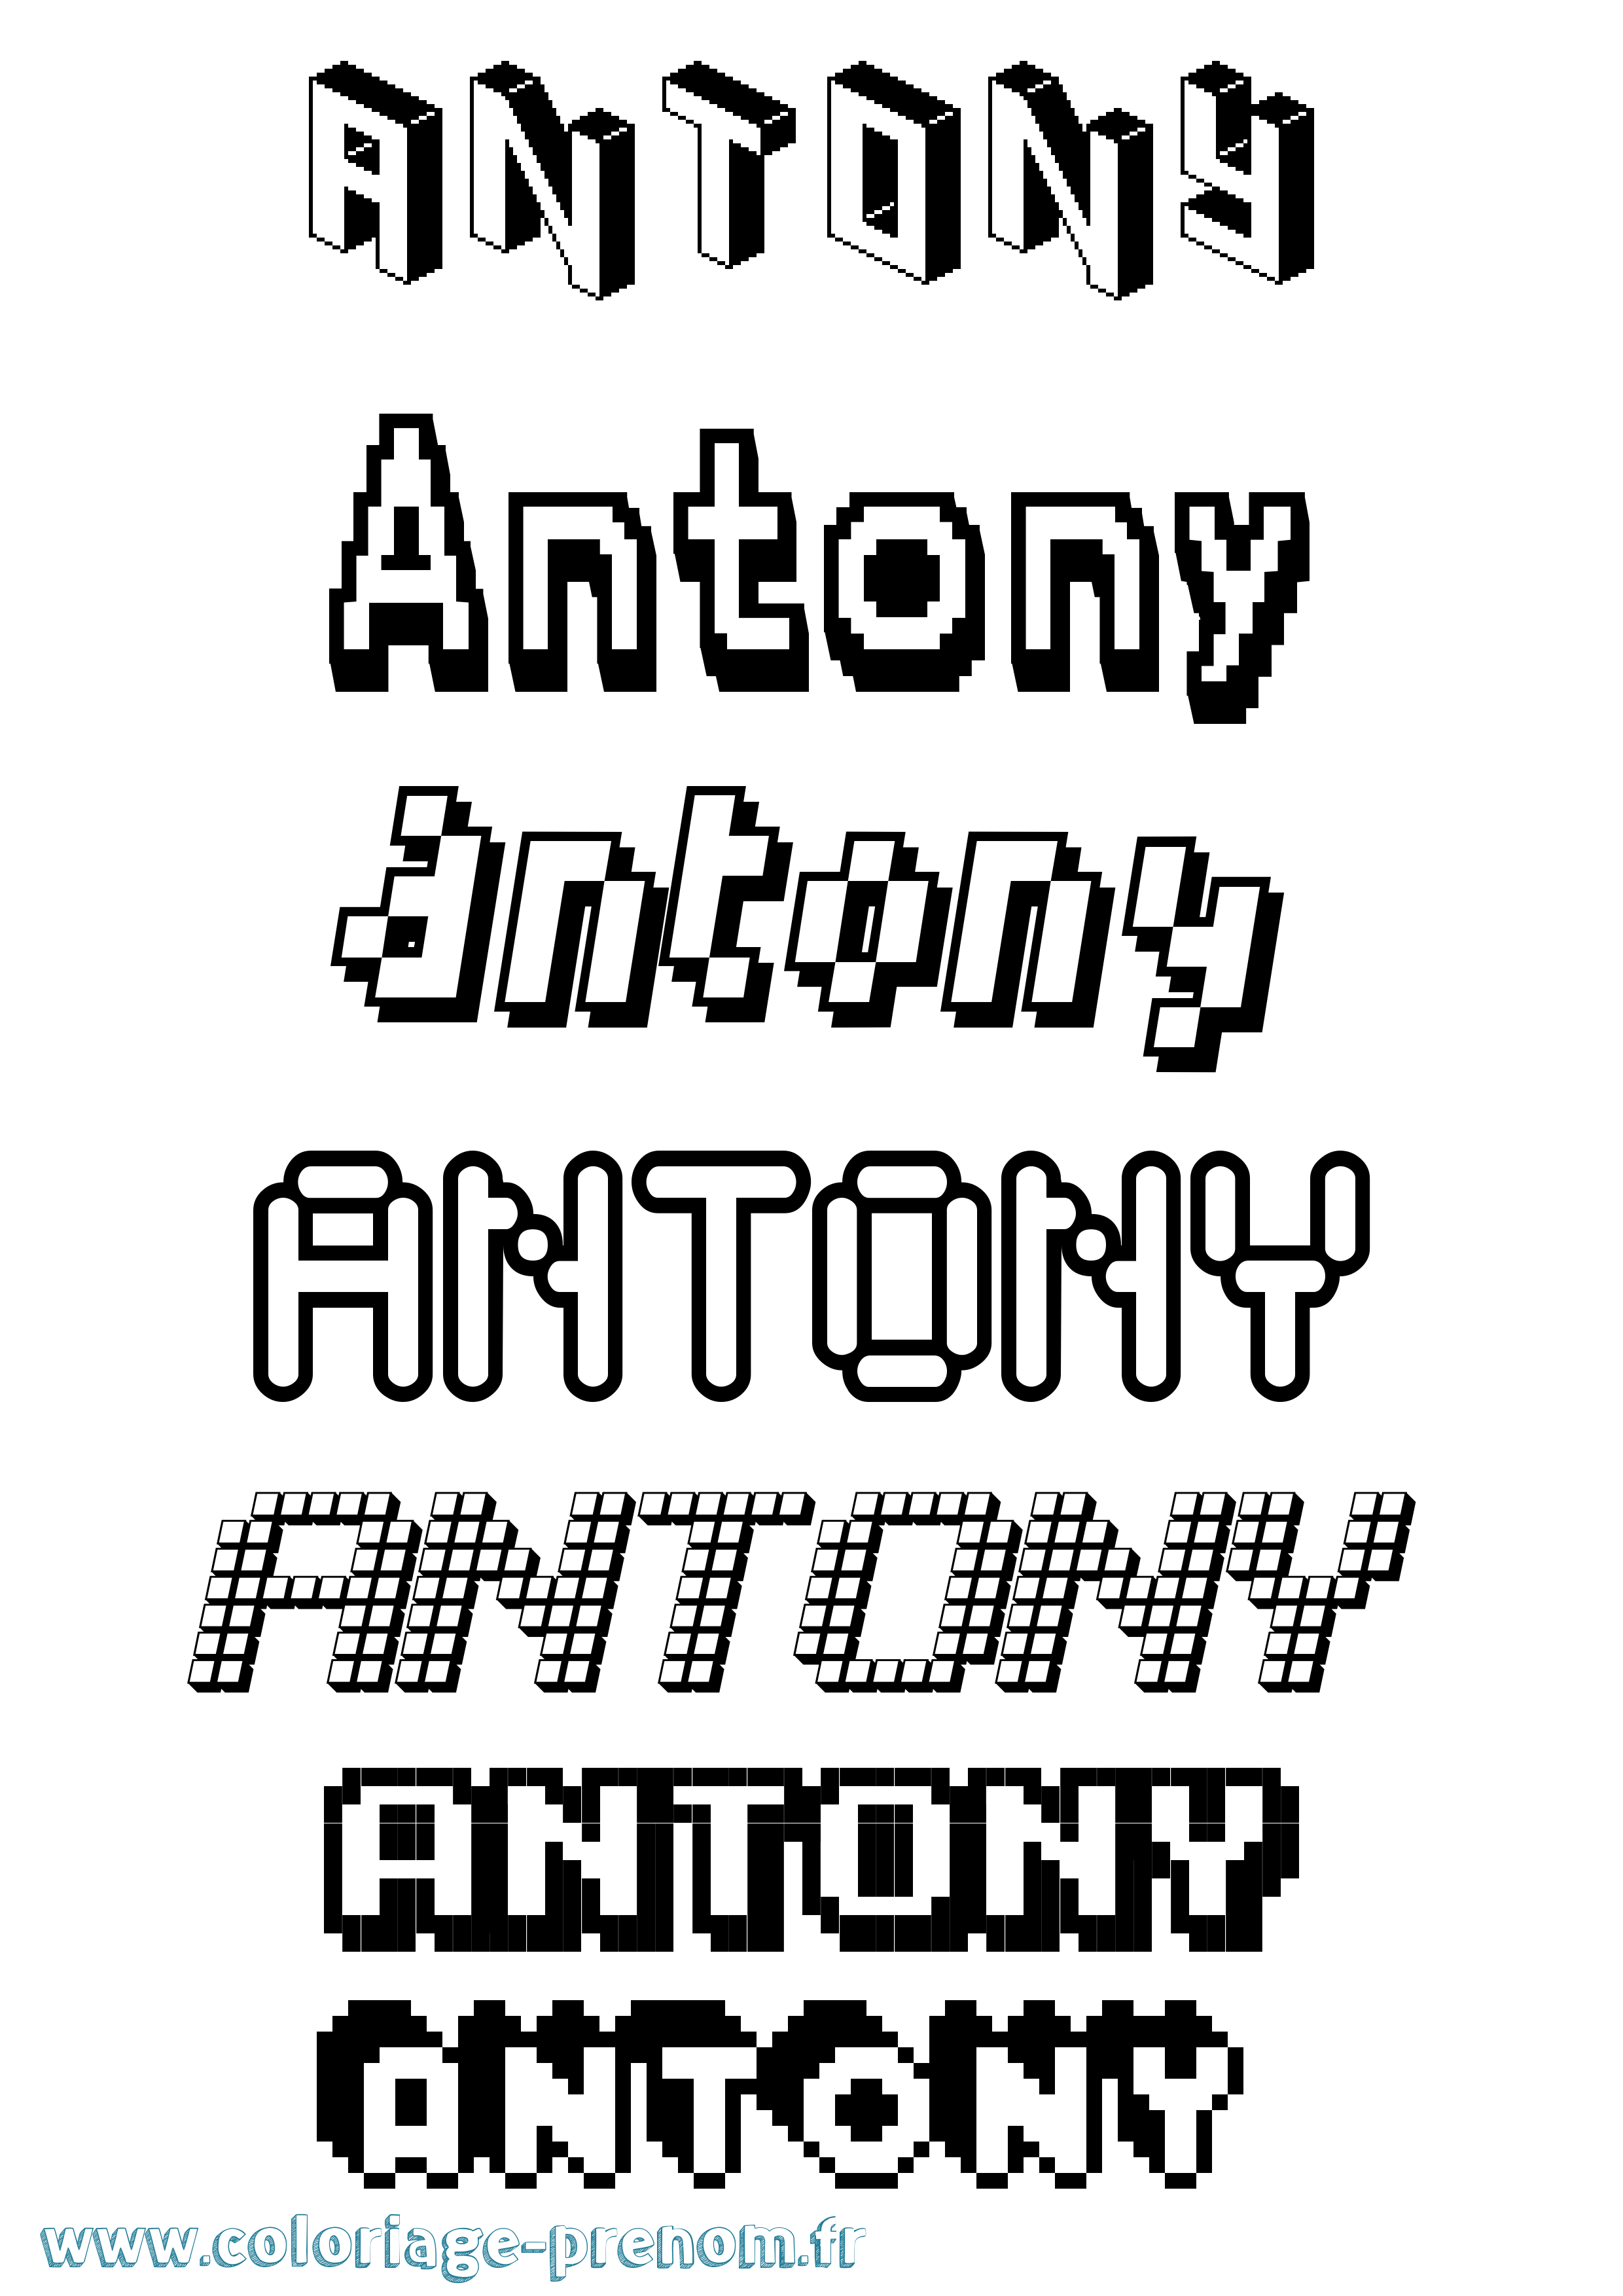 Coloriage prénom Antony Pixel